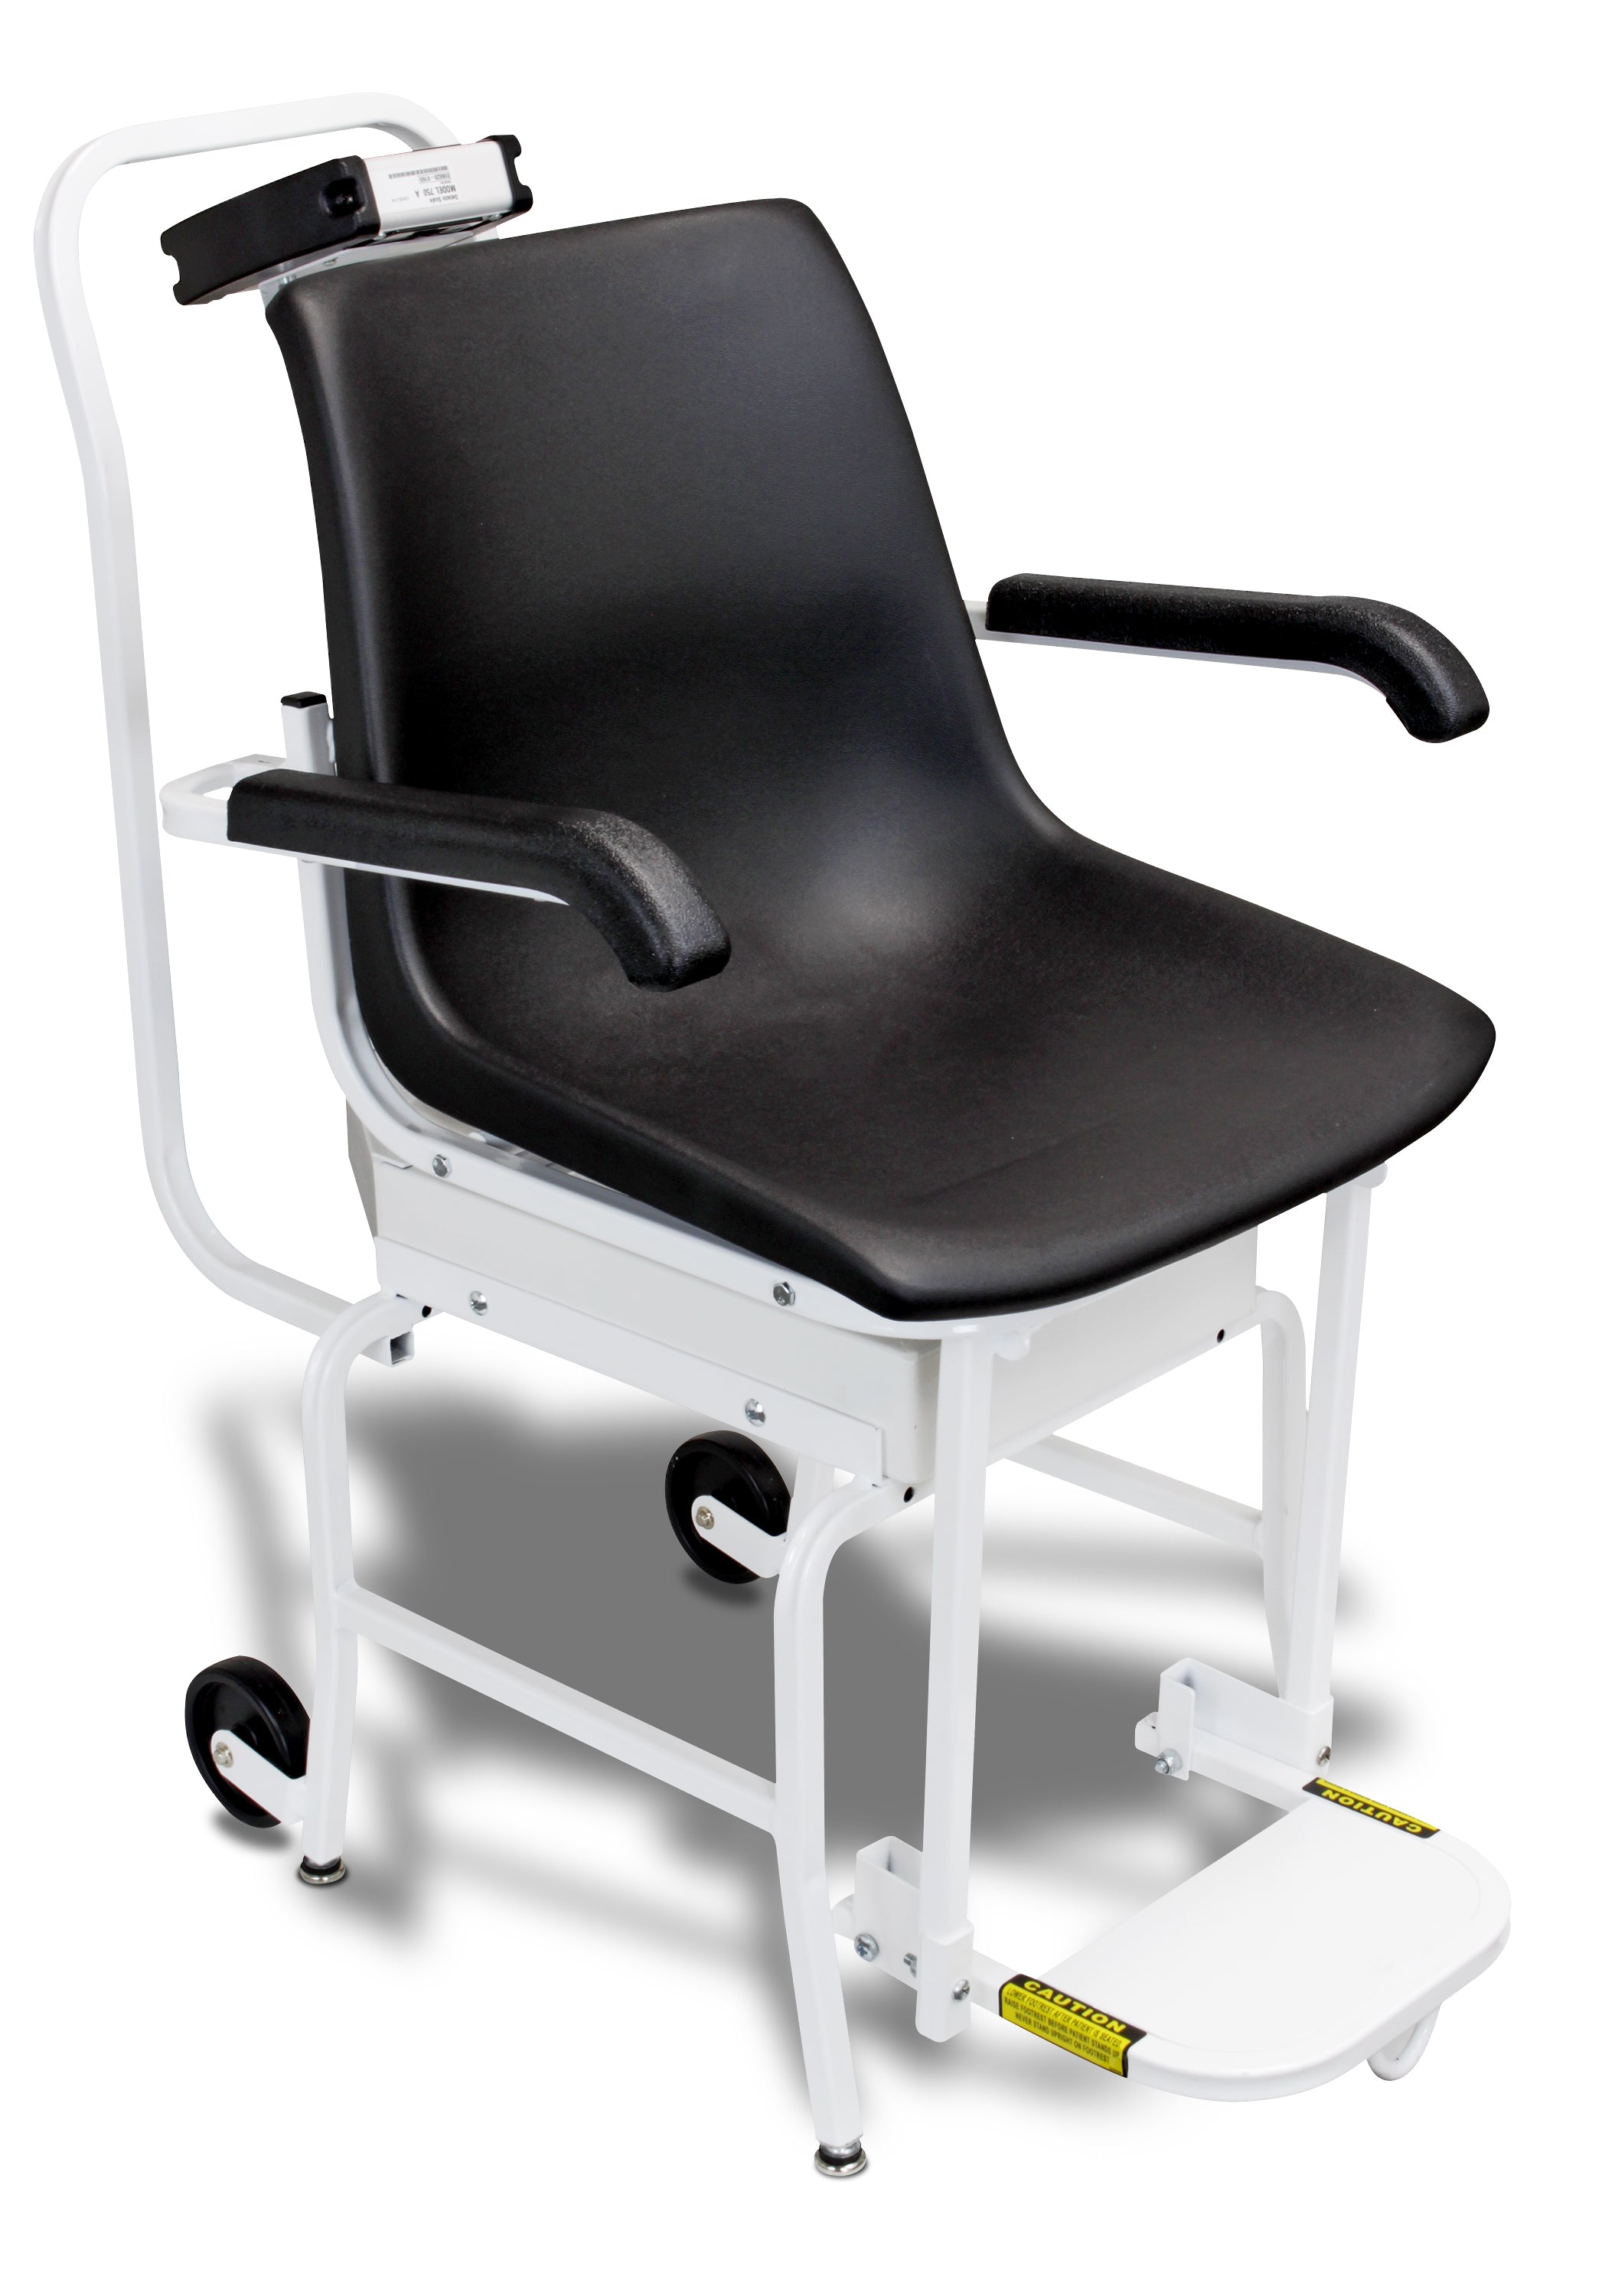 Detecto 6475 Chair Scale, Digital, 400 lb x .2 lb / 180 kg x .1 kg